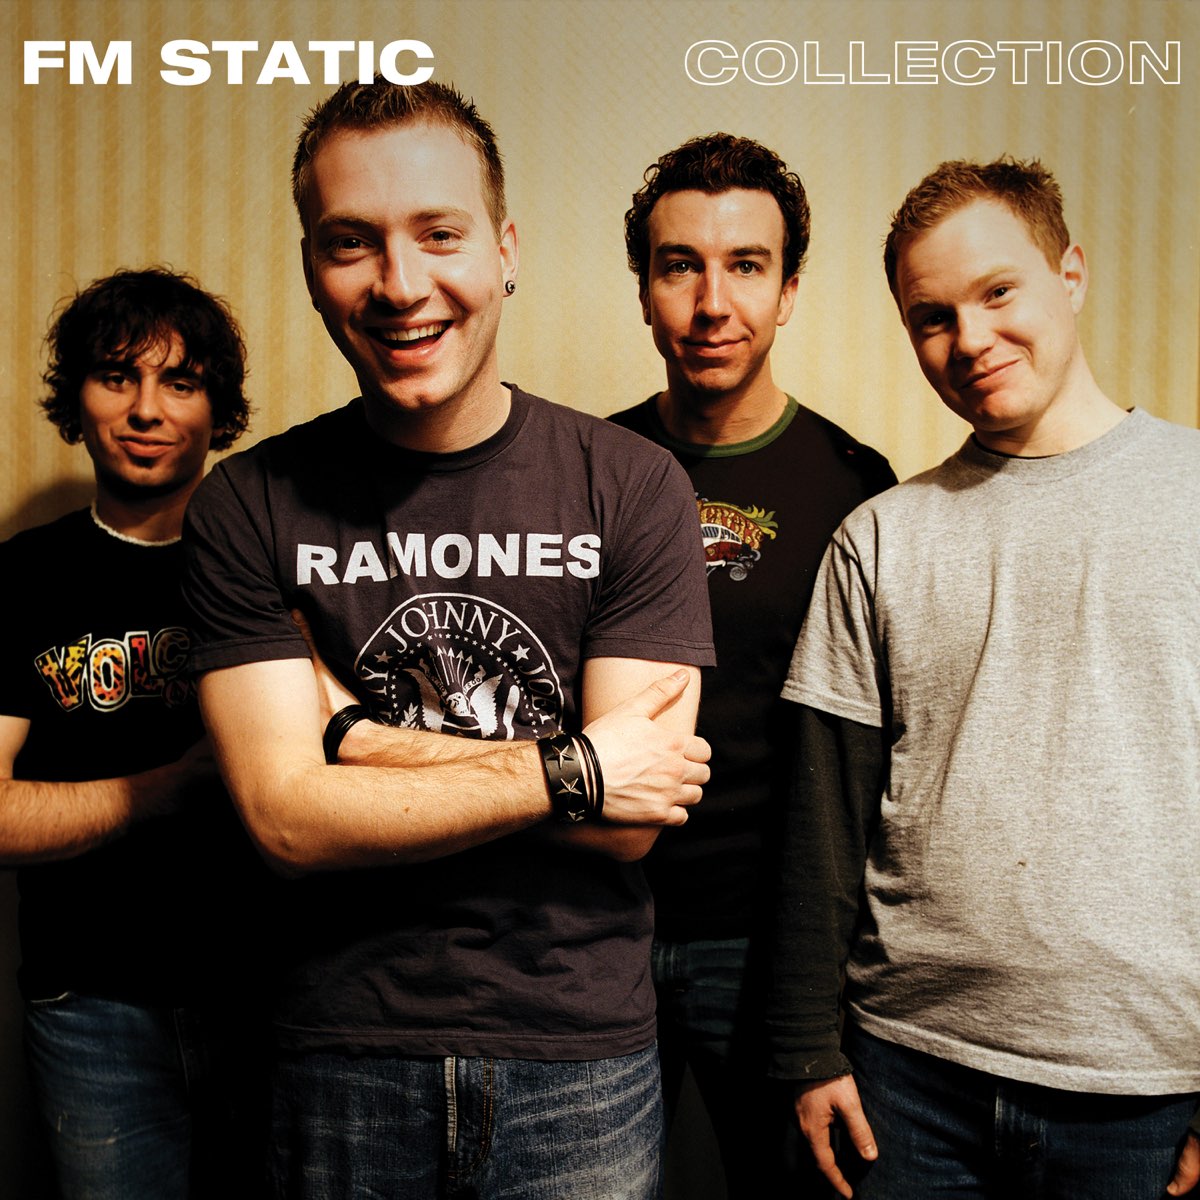 Static collection. Группа fm static. Солист fm static. Группа fm static 2003. Группа fm фото.